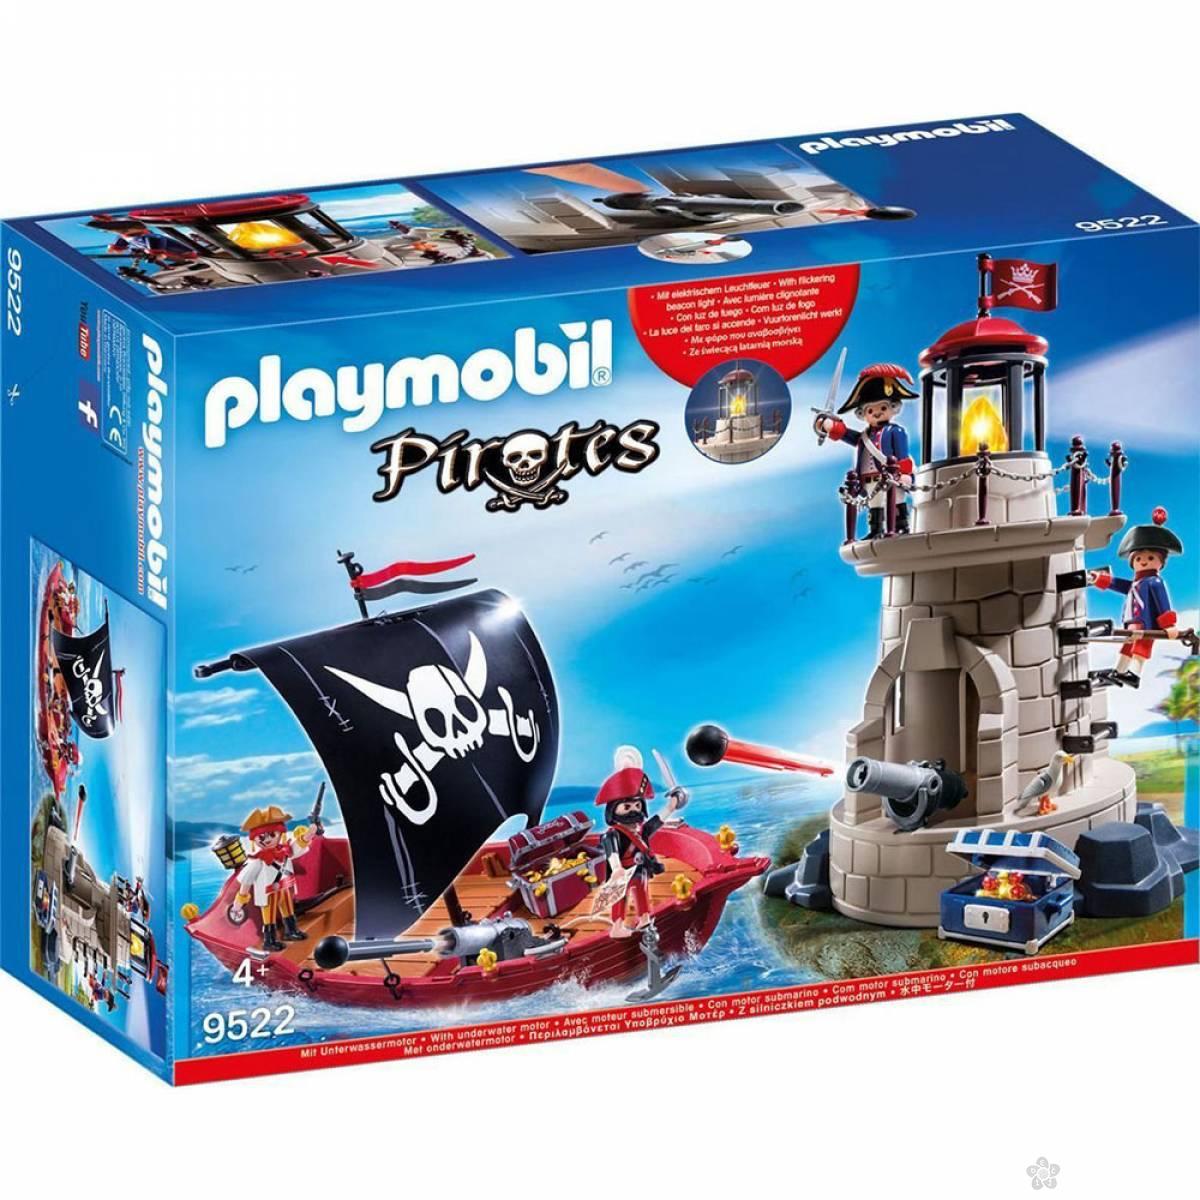 Playmobile Pirati set 20209 